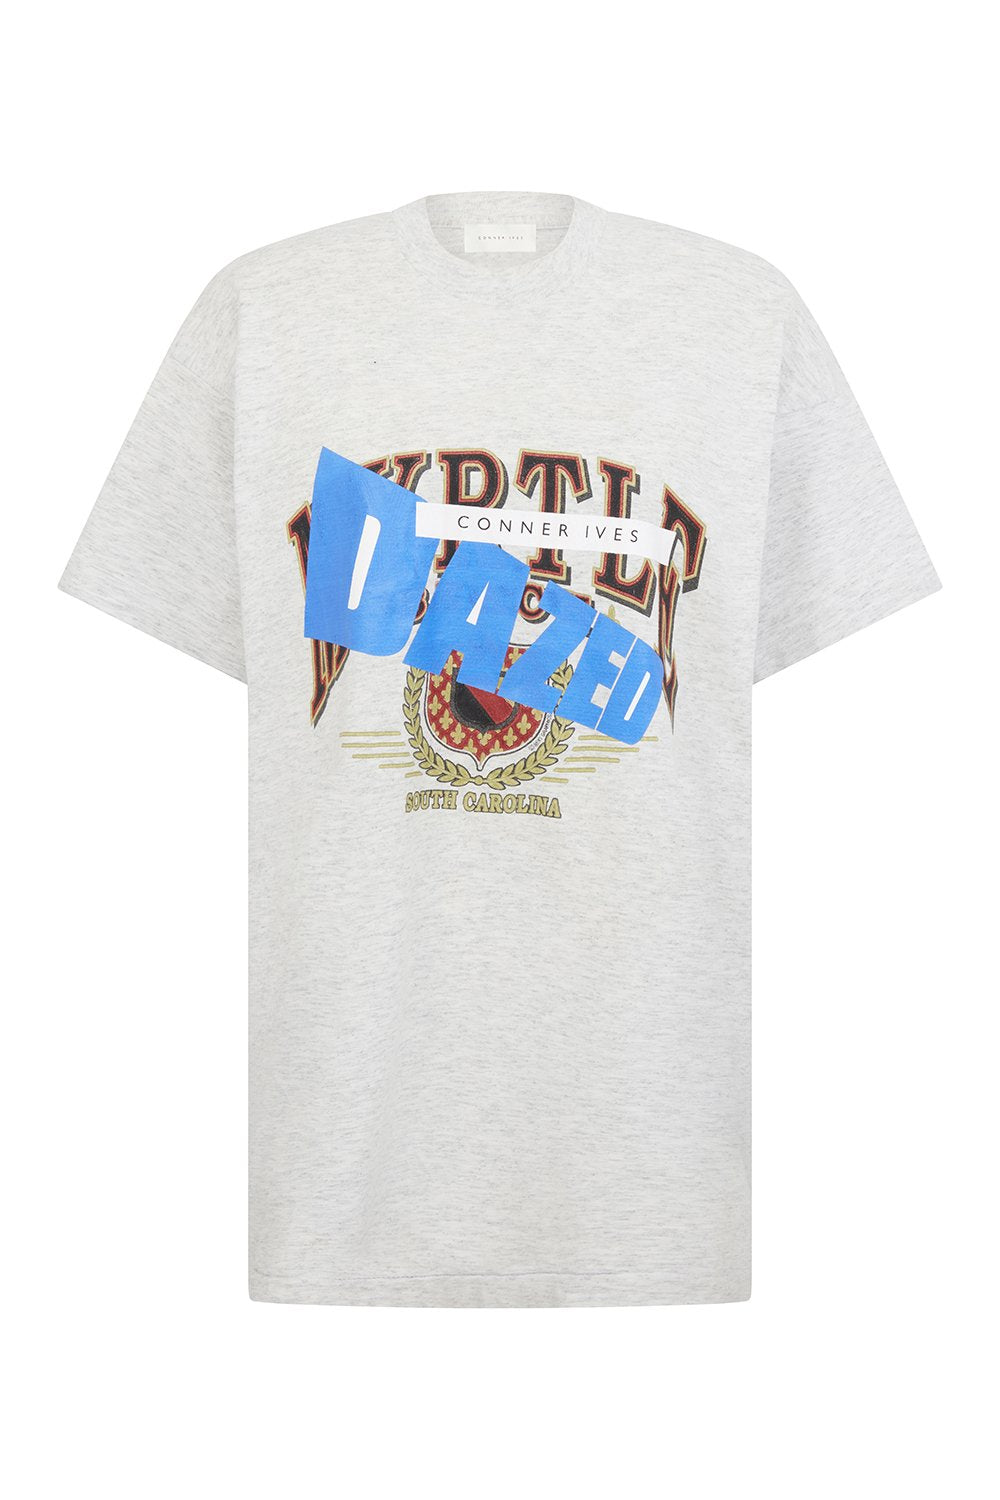 Conner Ives x Dazed Reprint T-shirt - Small